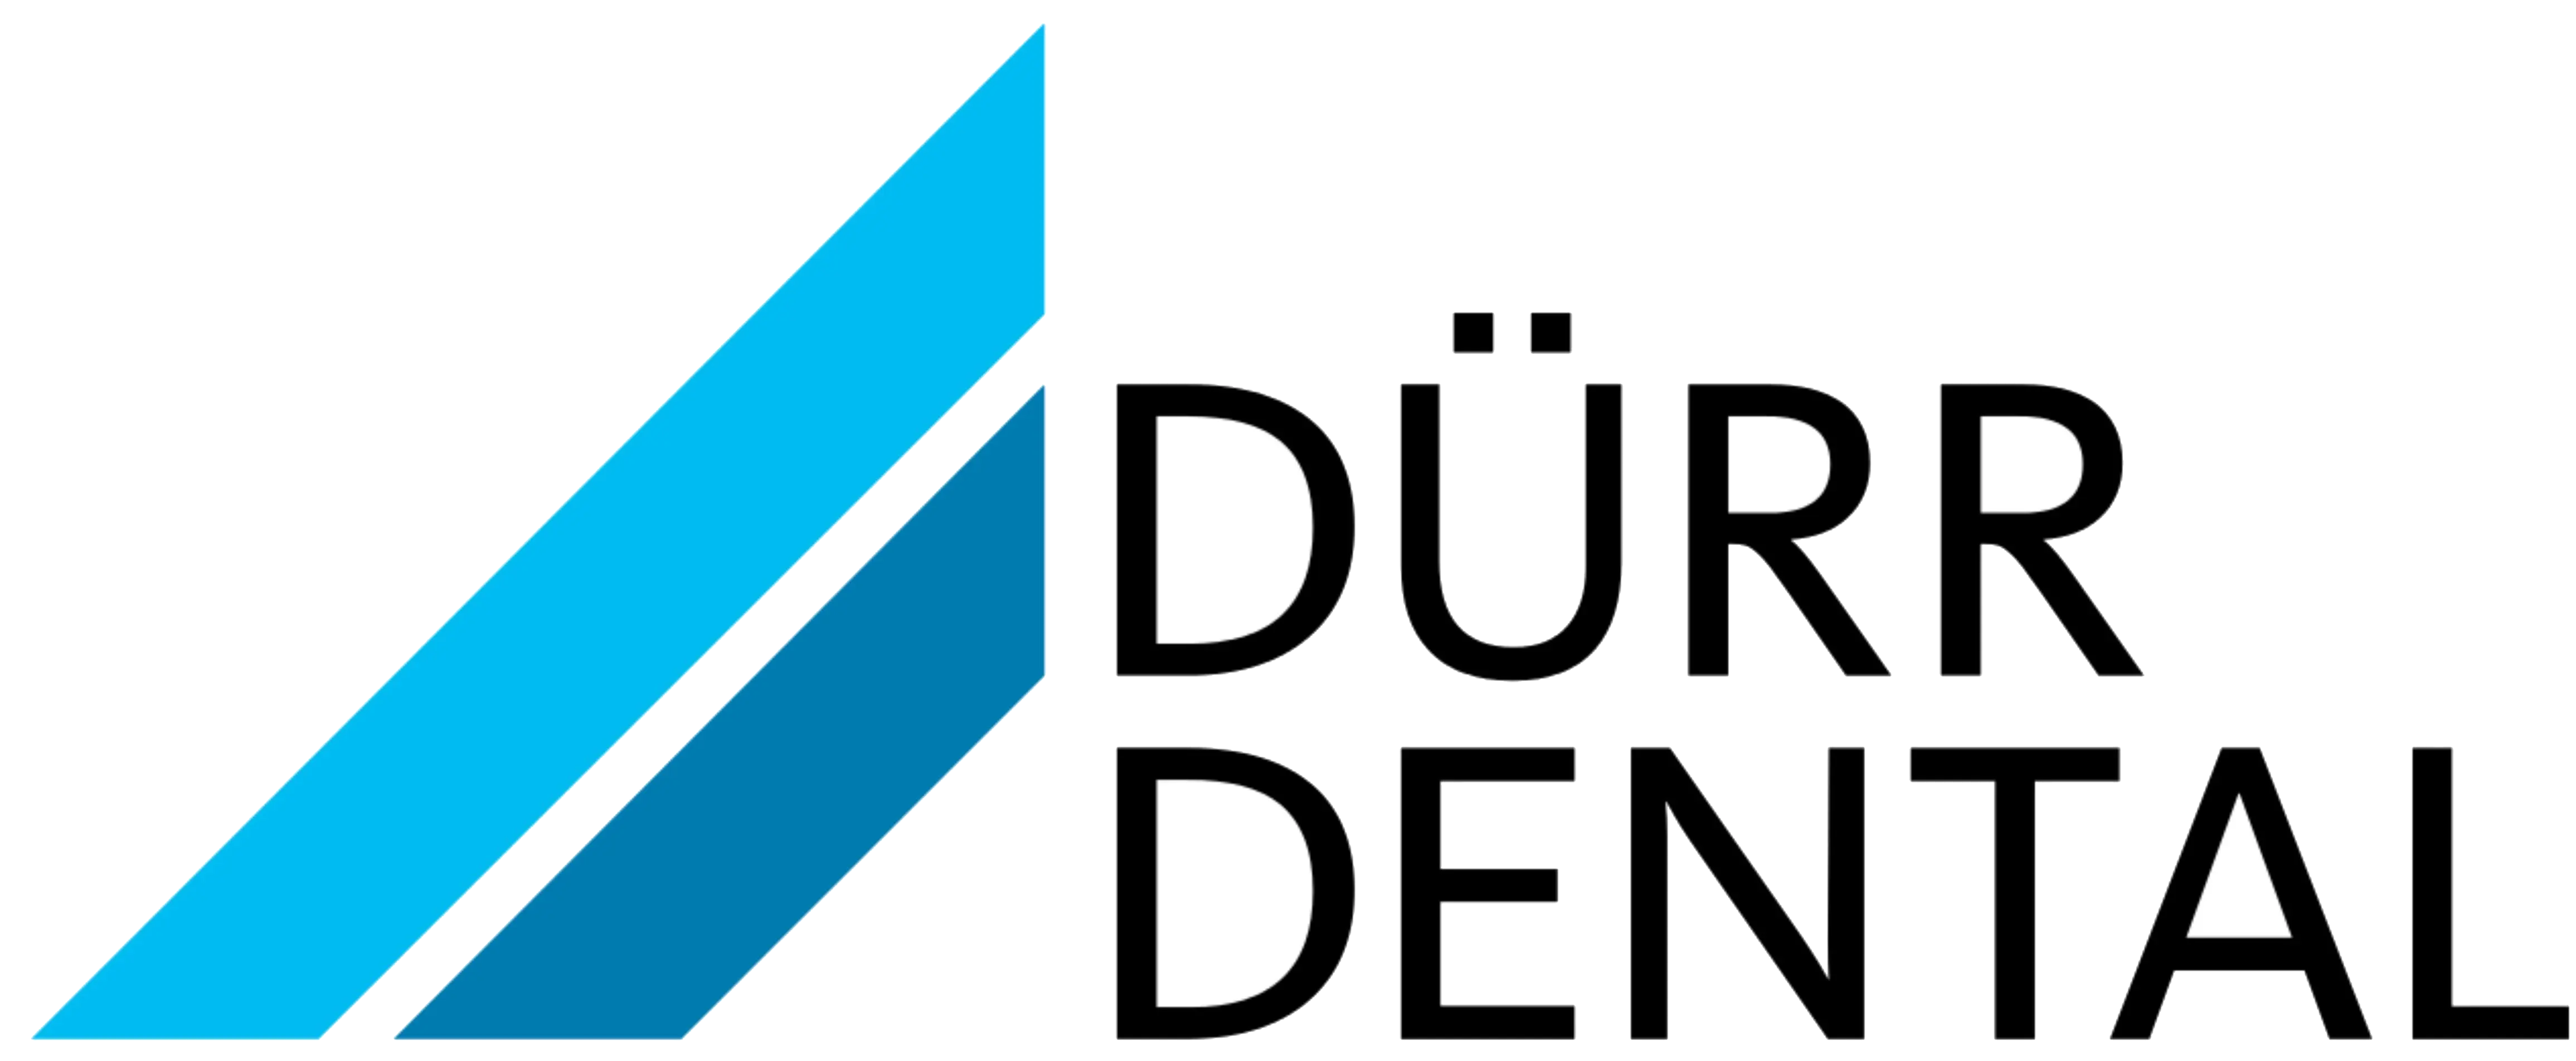 Все товары бренда "Dürr Dental"